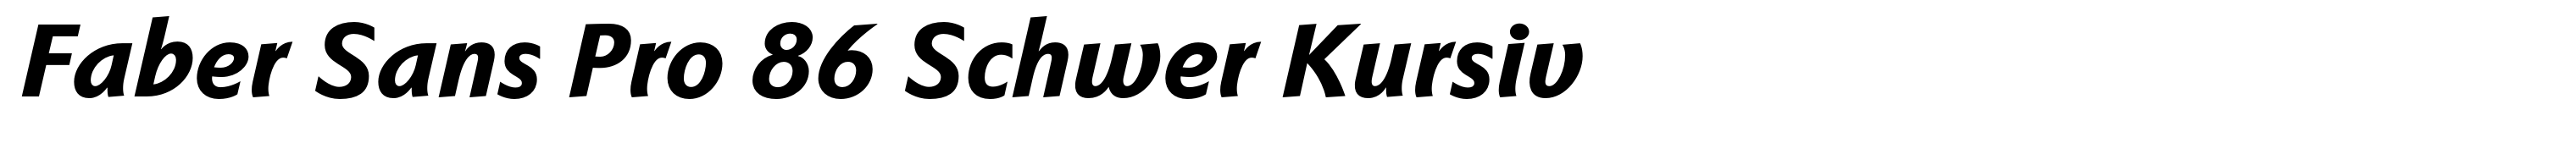 Faber Sans Pro 86 Schwer Kursiv